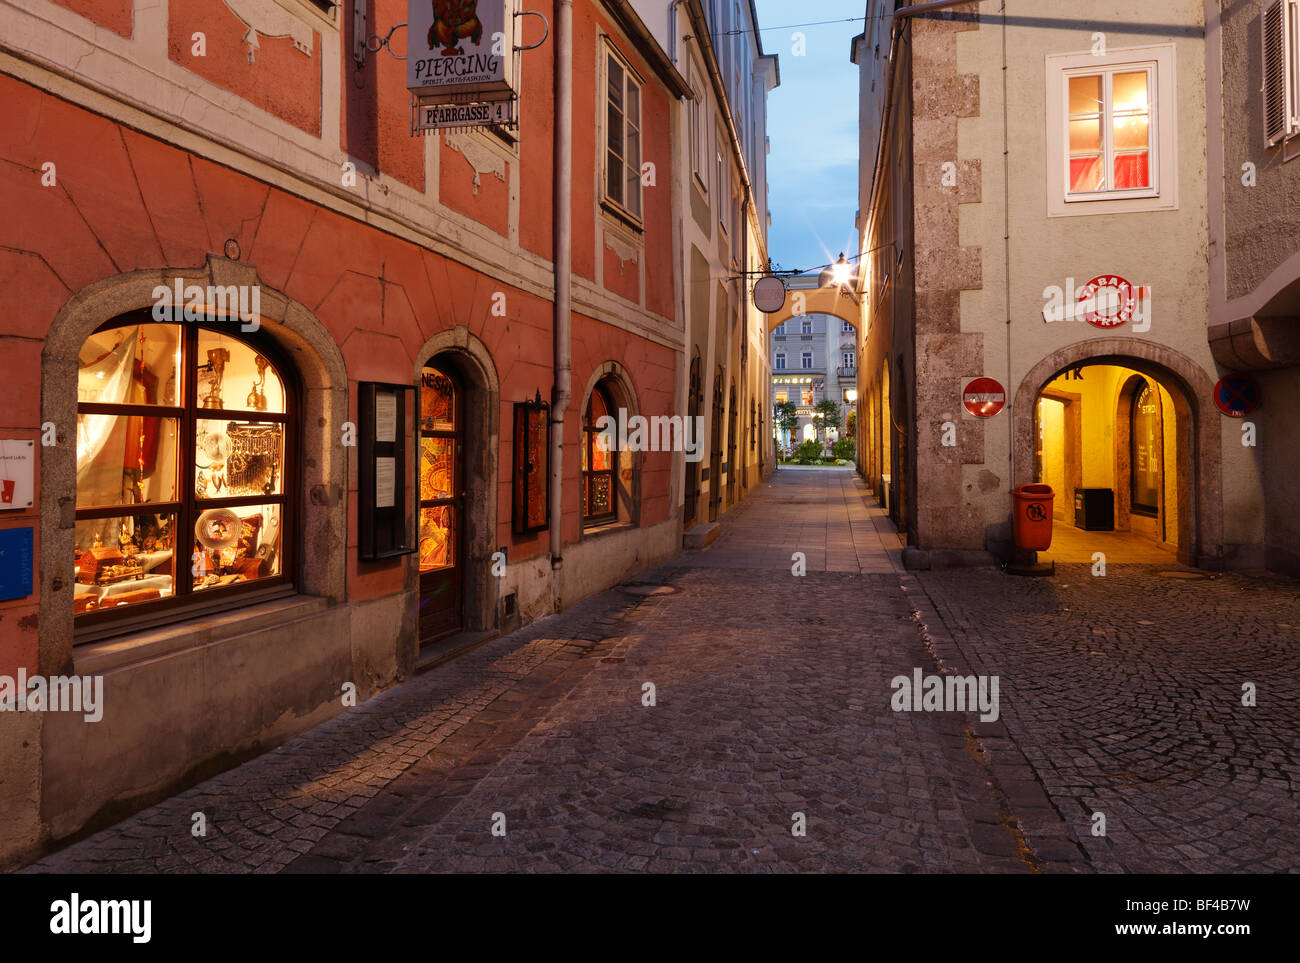 Pfarrgasse alley, Linz, Upper Austria, Austria, Europe Stock Photo